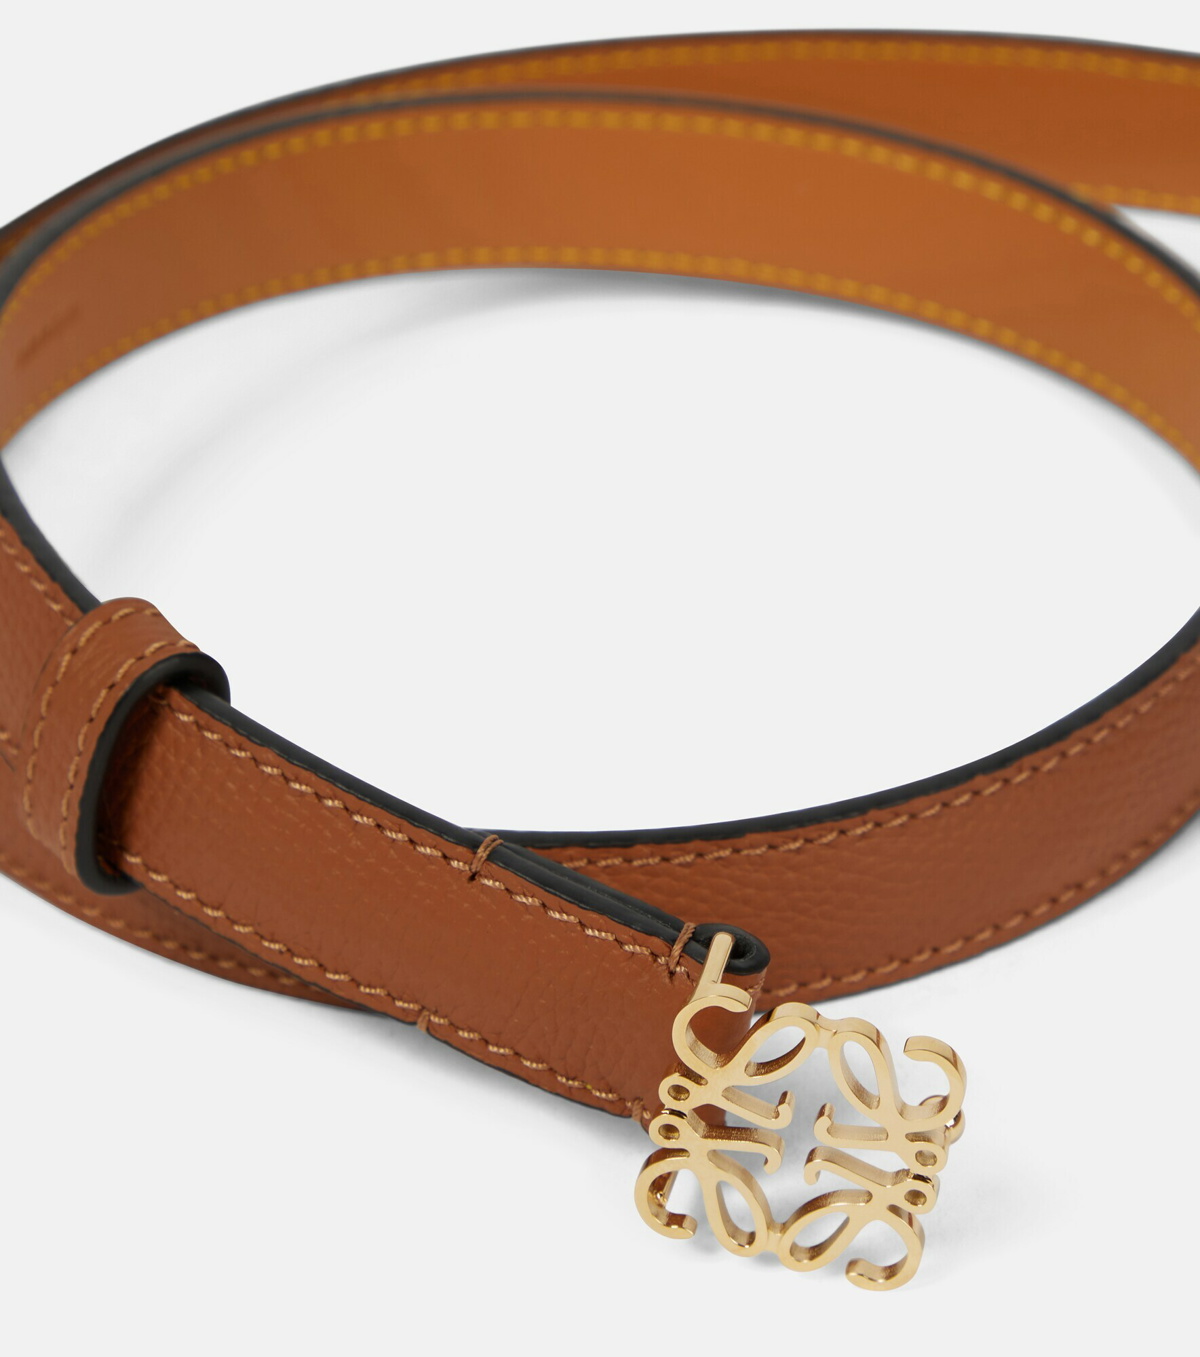 Loewe - Anagram leather belt Loewe